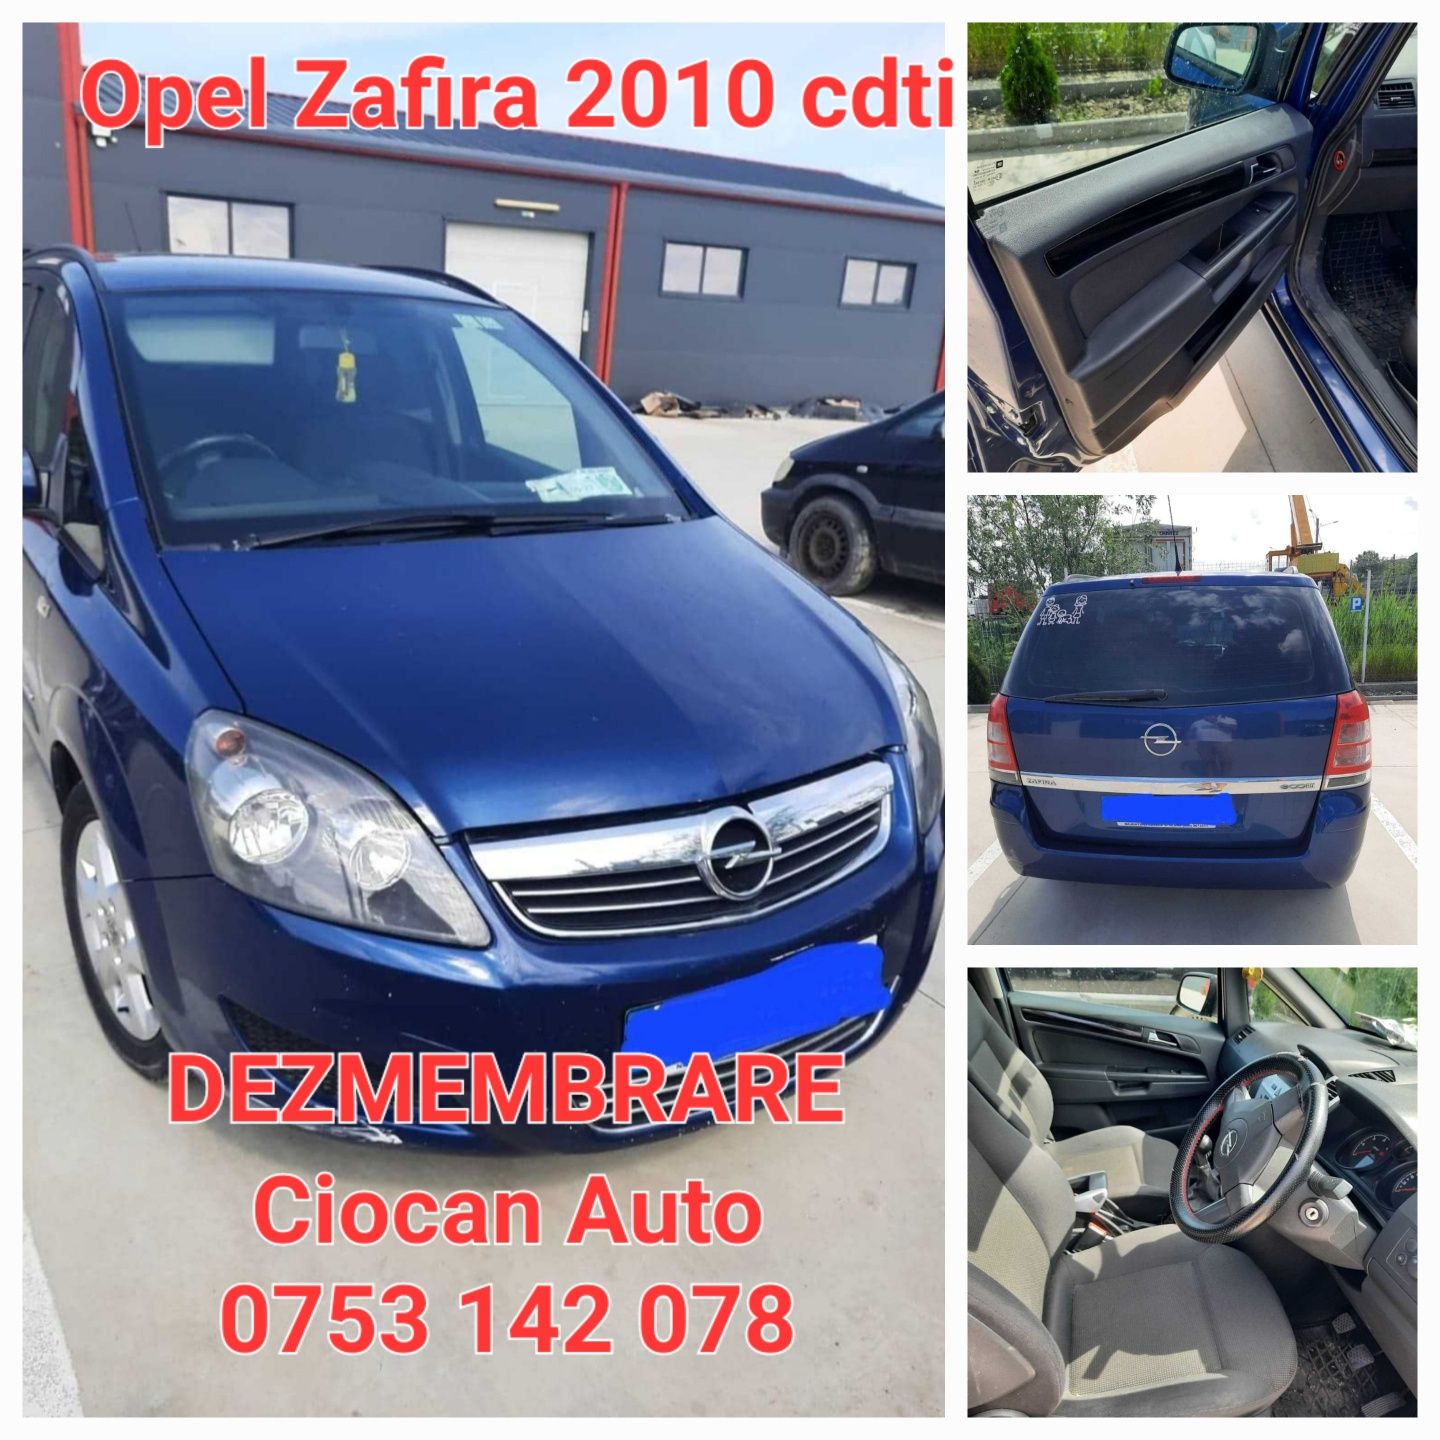 Piese auto Opel Zafira 2010 1.7 1.9 cdti, toate piesele disponibile